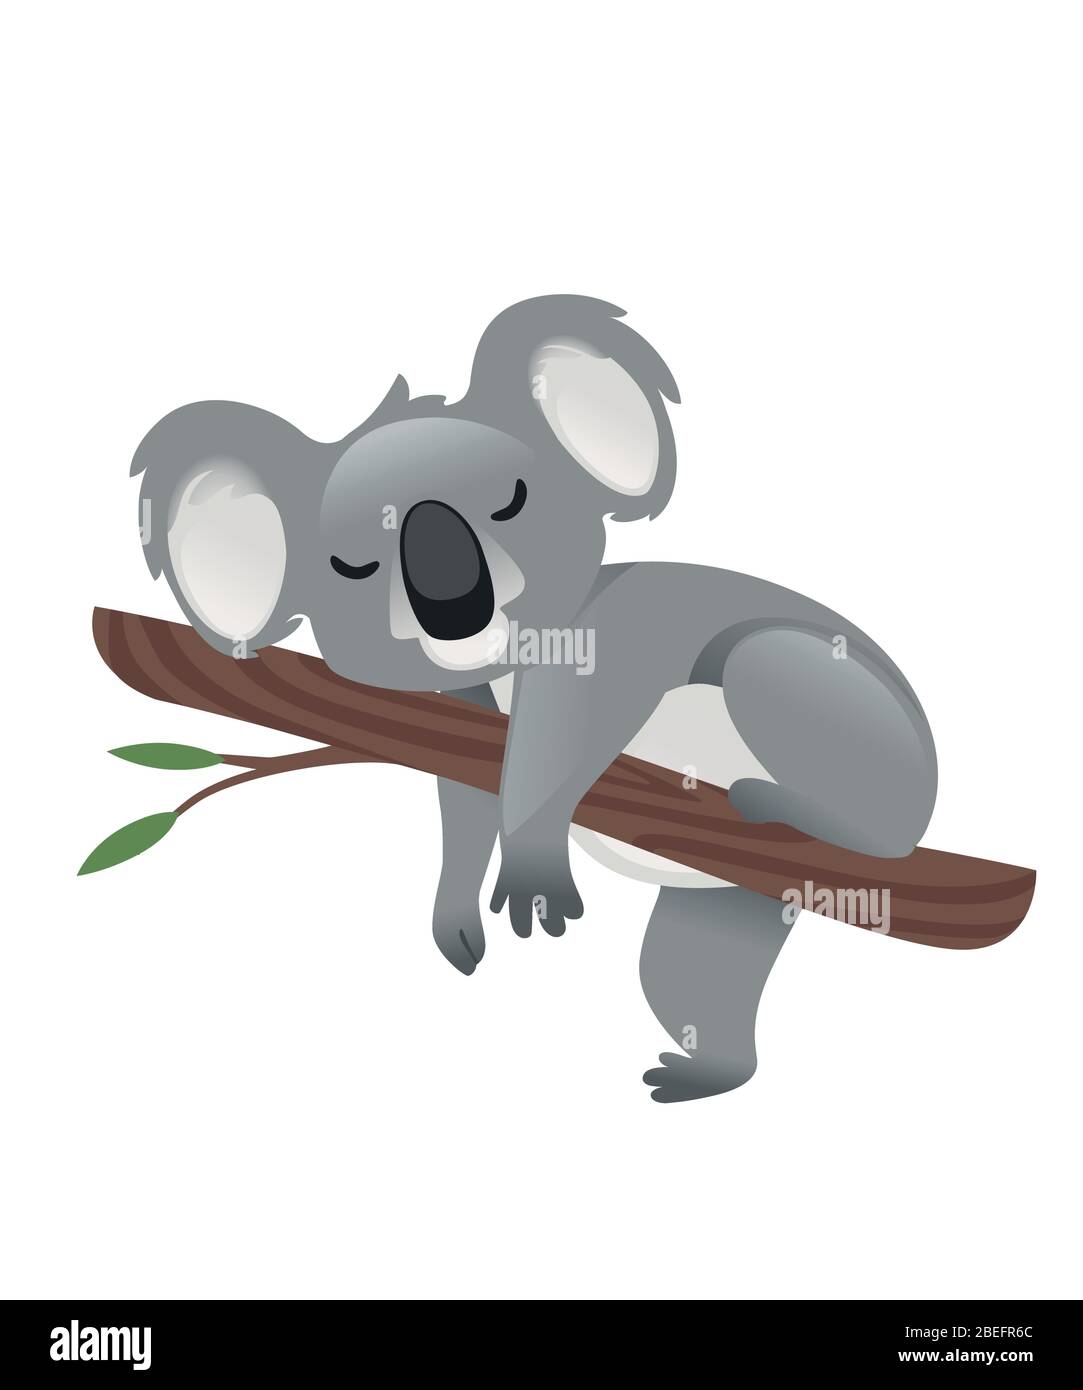 Lindo oso koala gris durmiendo en rama de madera con hojas verdes dibujos  animados animal diseño plano vector ilustración aislada sobre fondo blanco  Imagen Vector de stock - Alamy